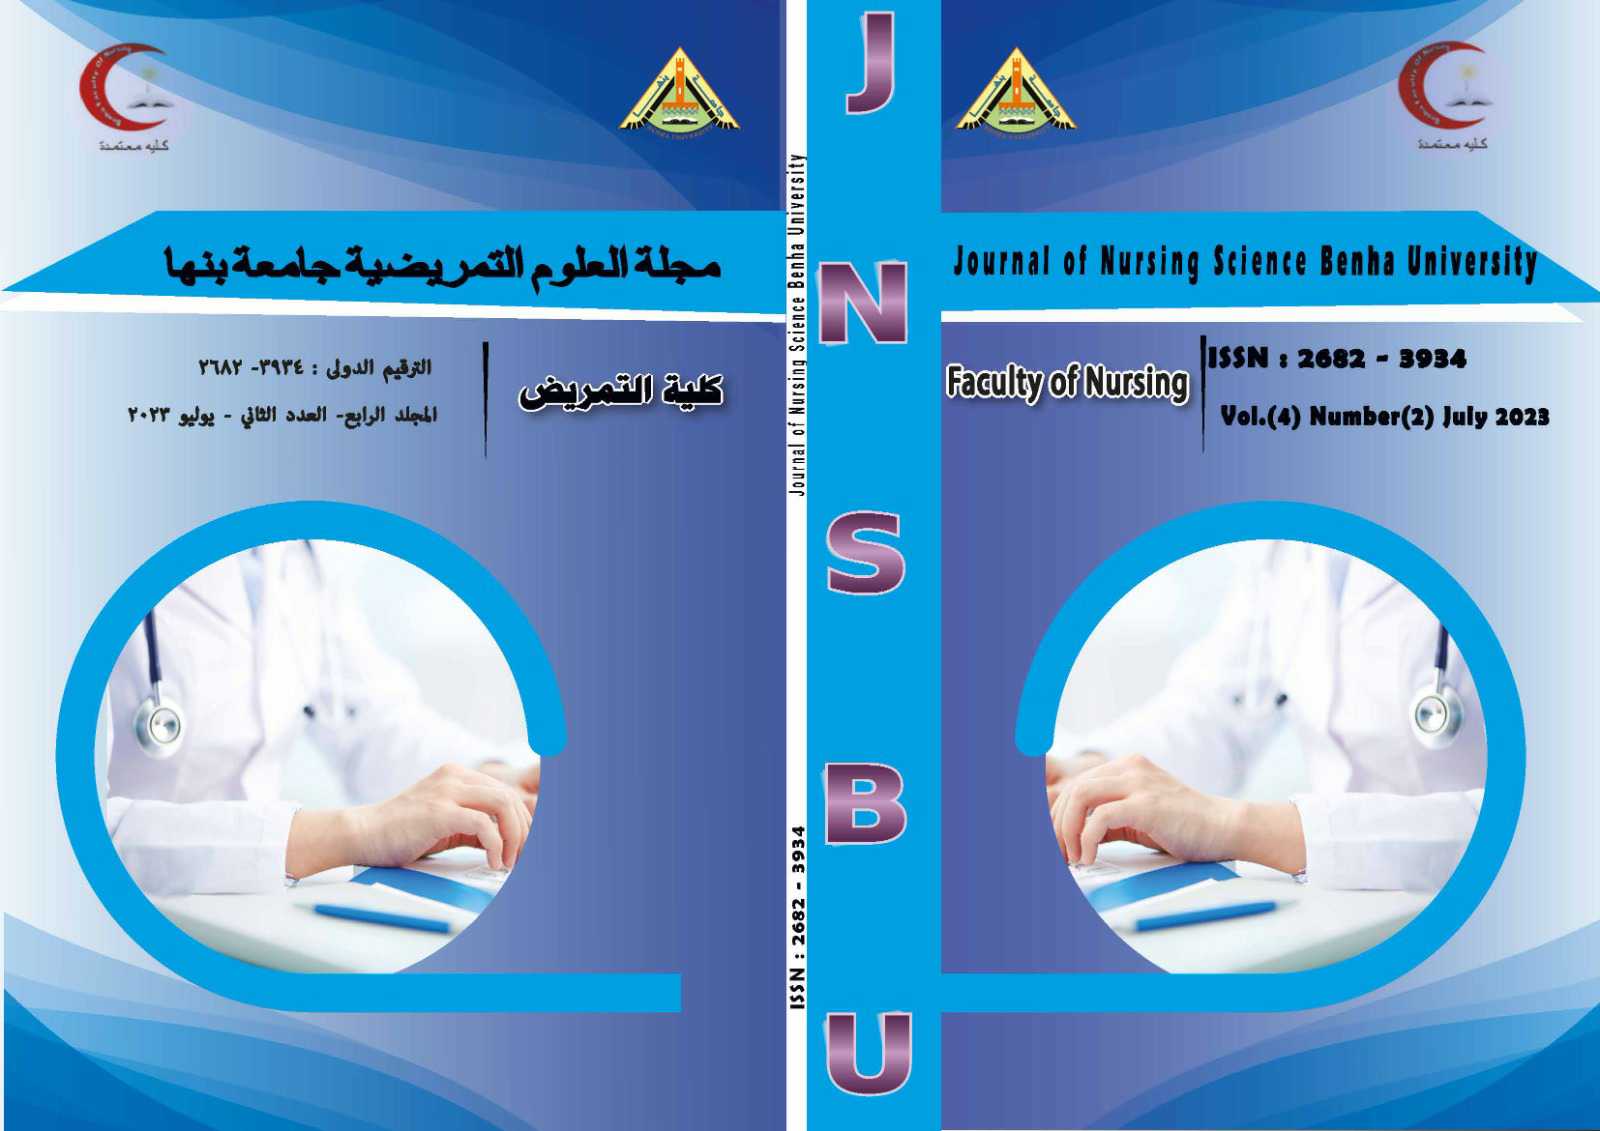 Journal of Nursing Science Benha University